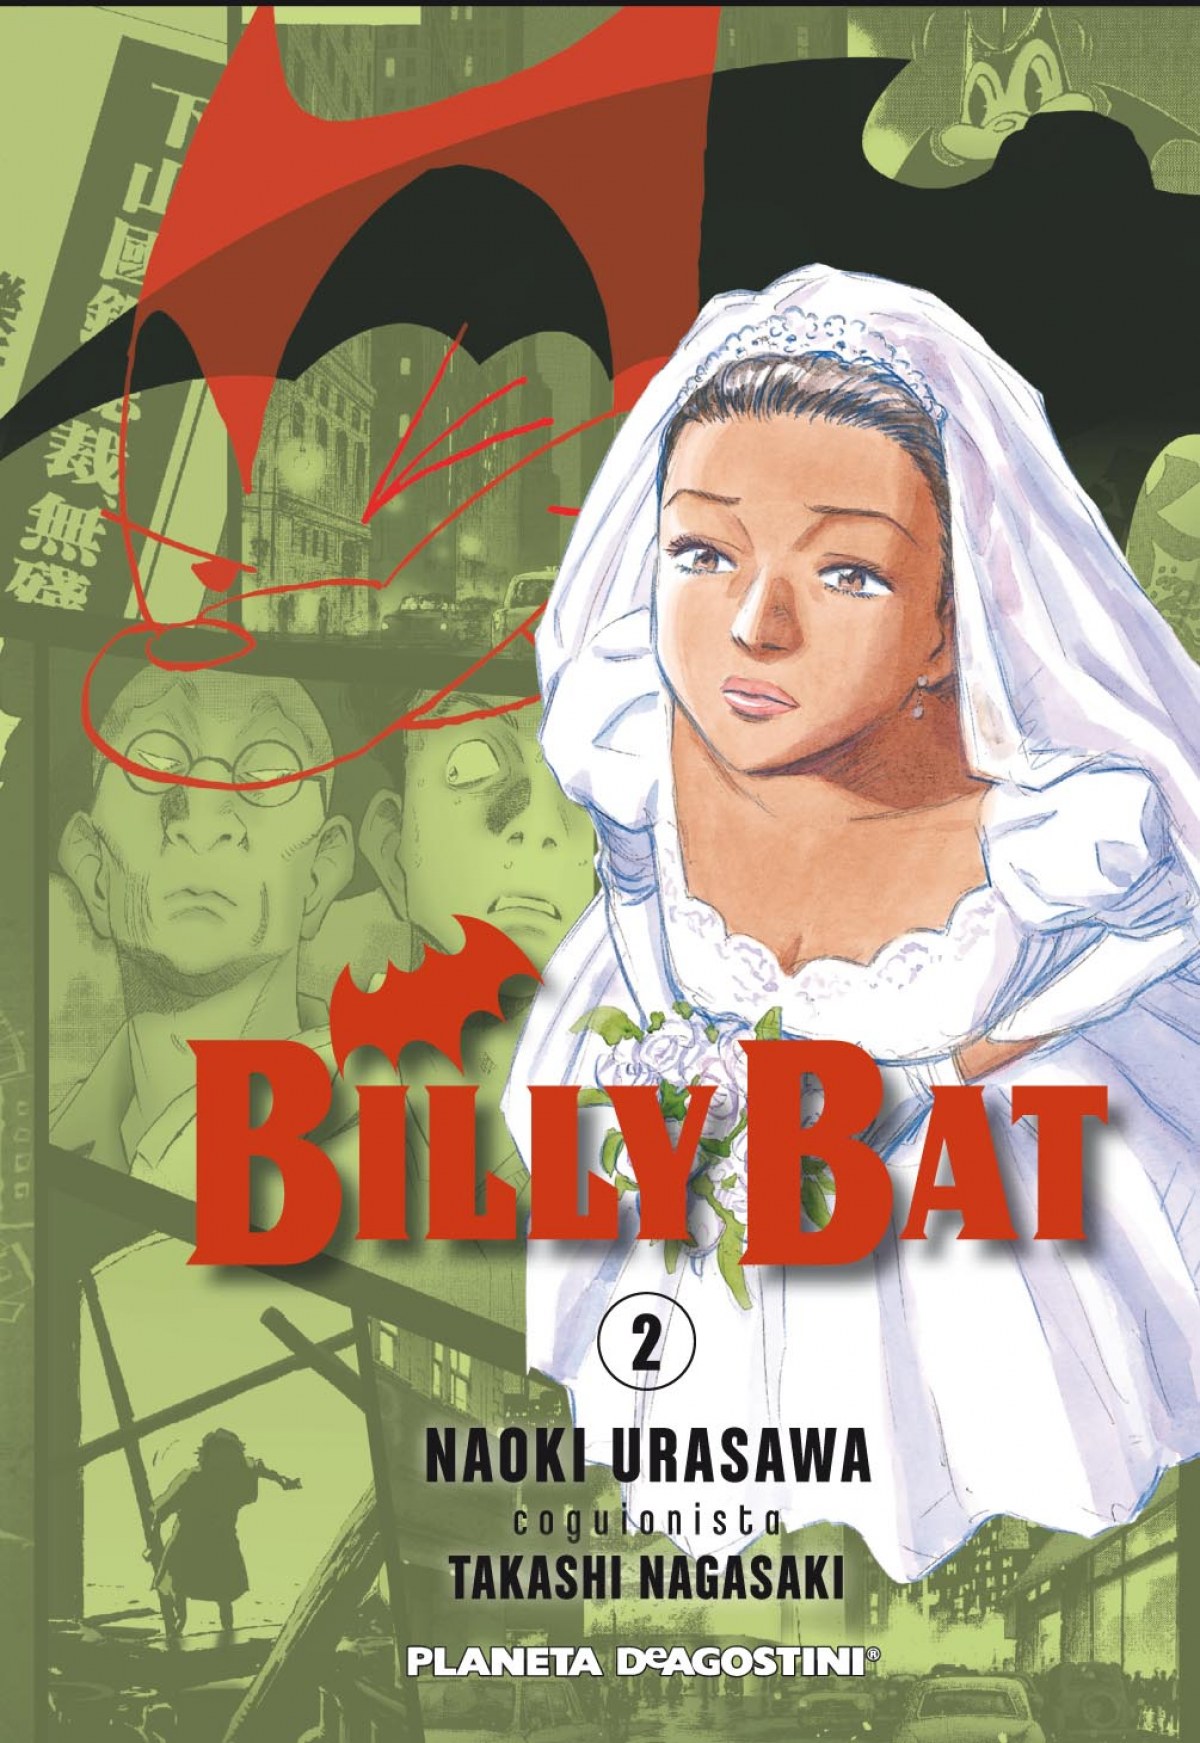 Billy Bat nº2 - Takashi Nagasaki/Naoki Urasawa